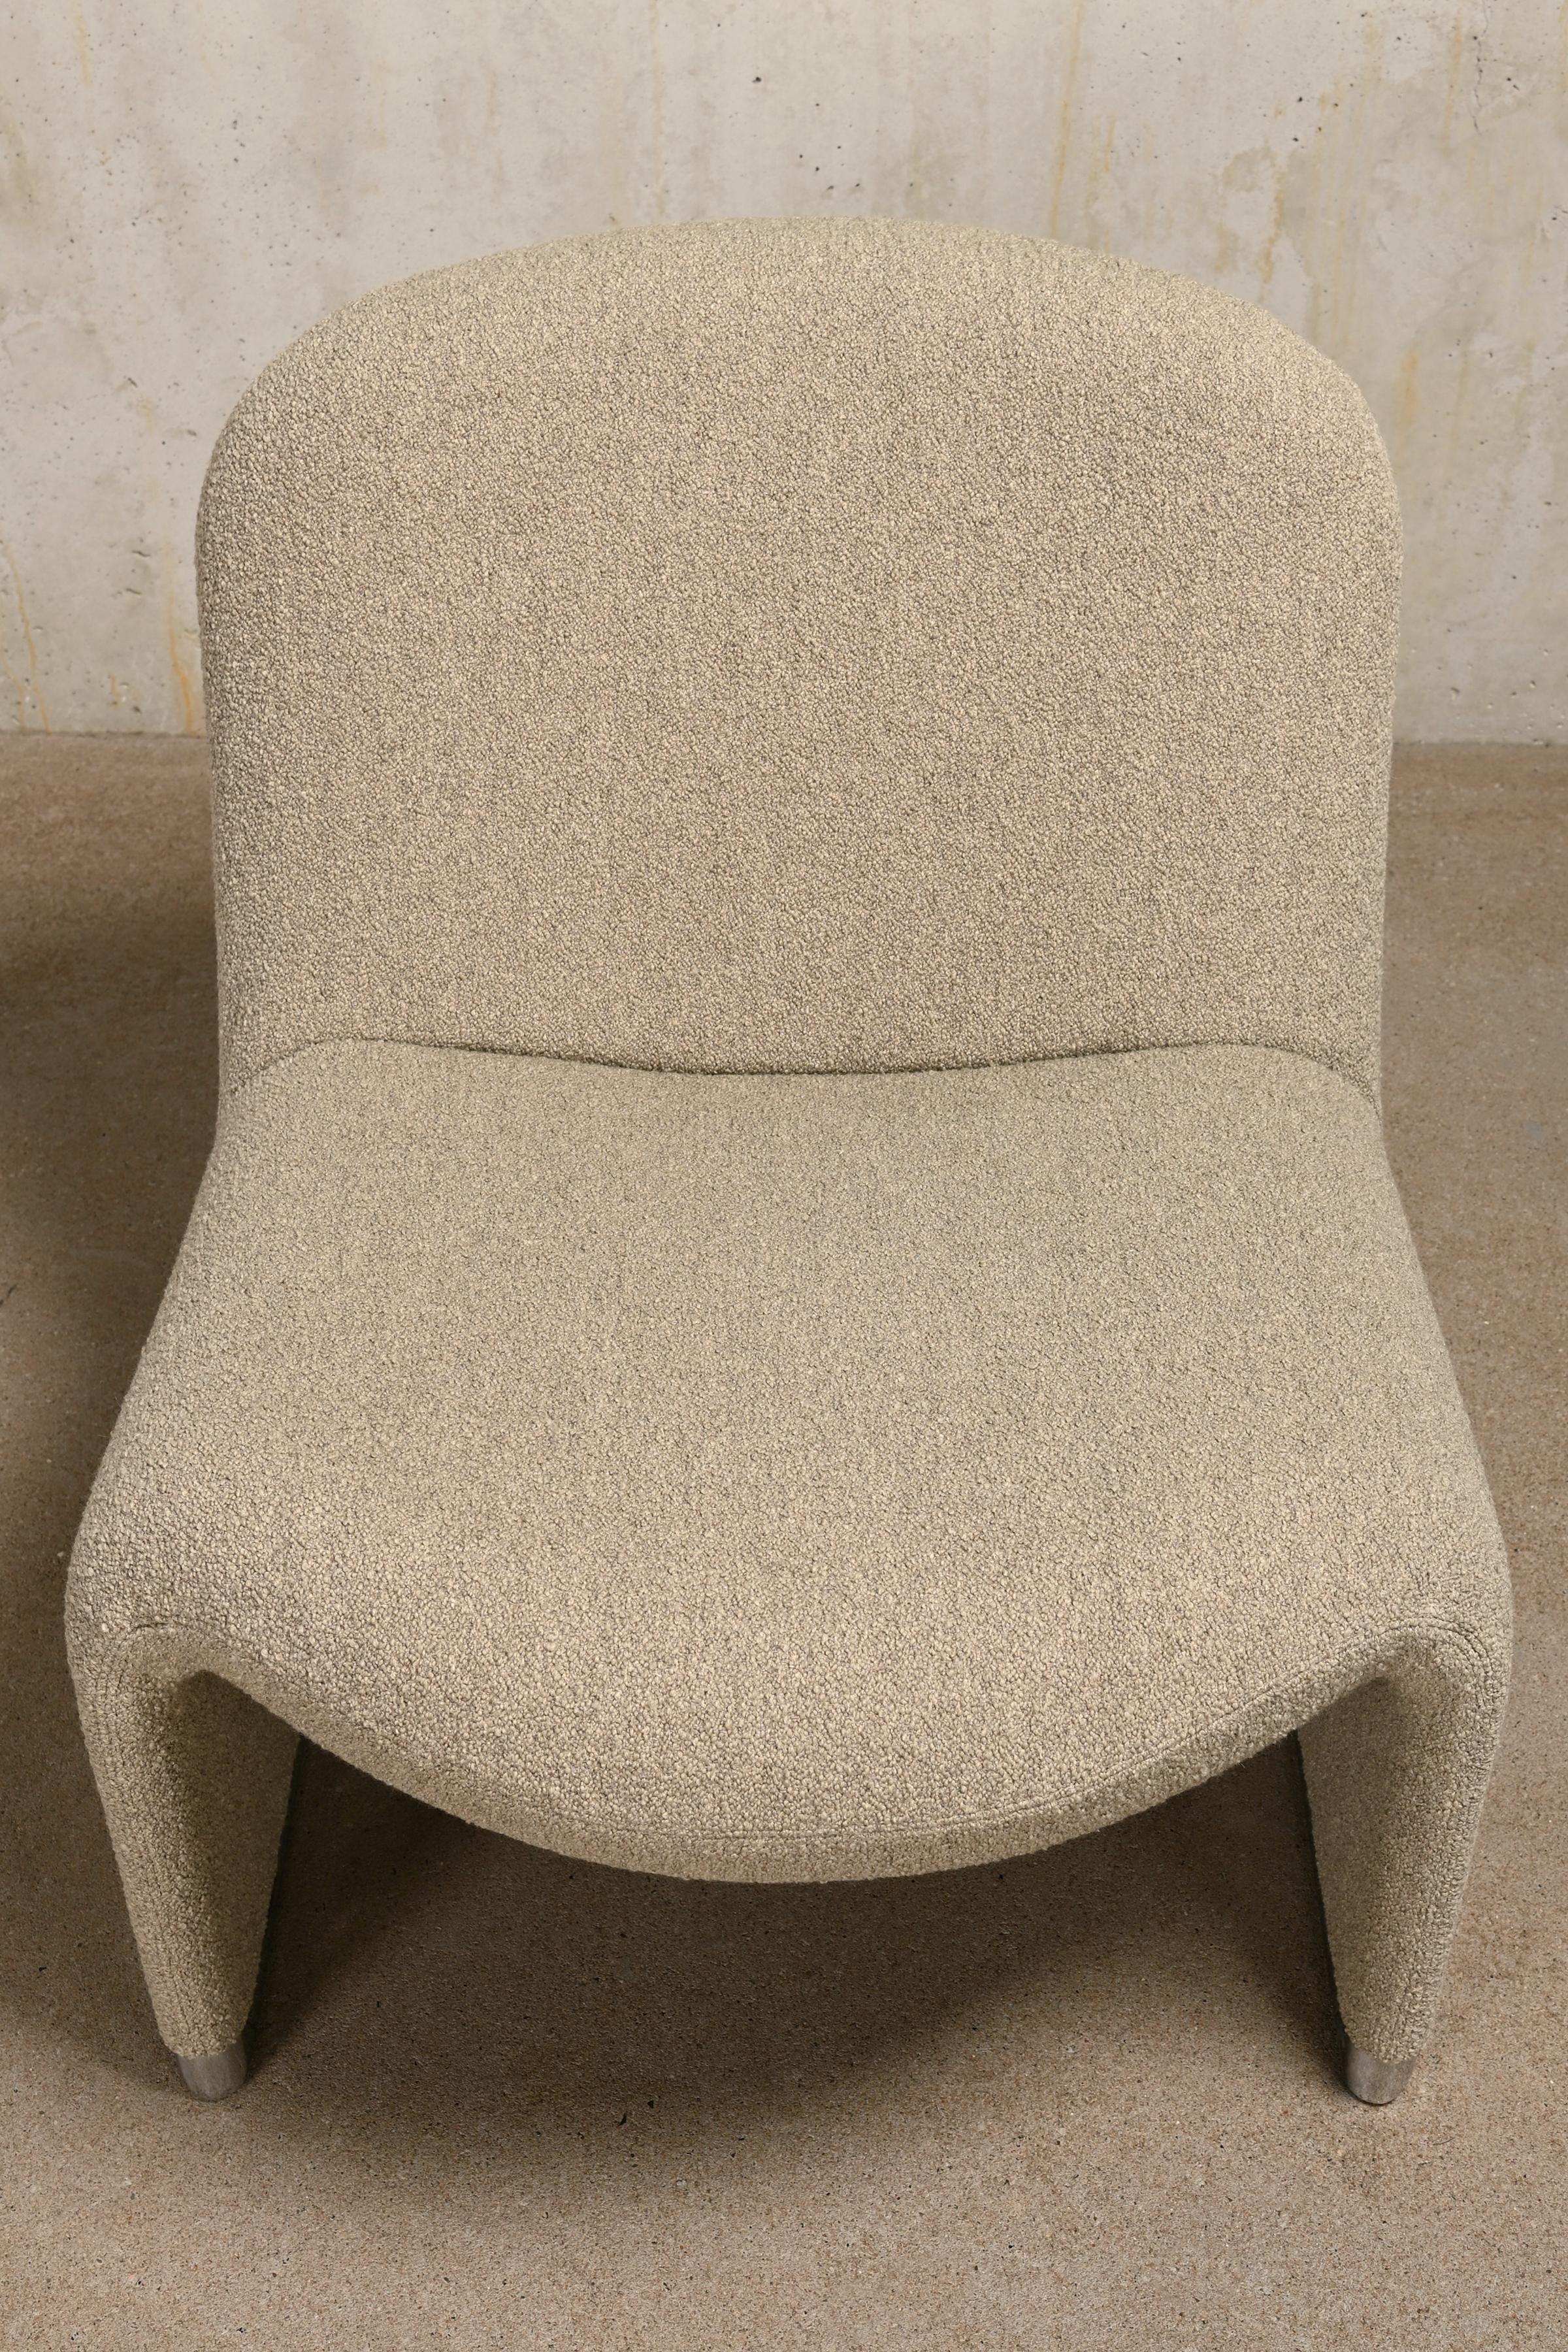 Giancarlo Piretti Alky Lounge Chair in Stone Grey Bouclé Wool, Anonima Castelli For Sale 2